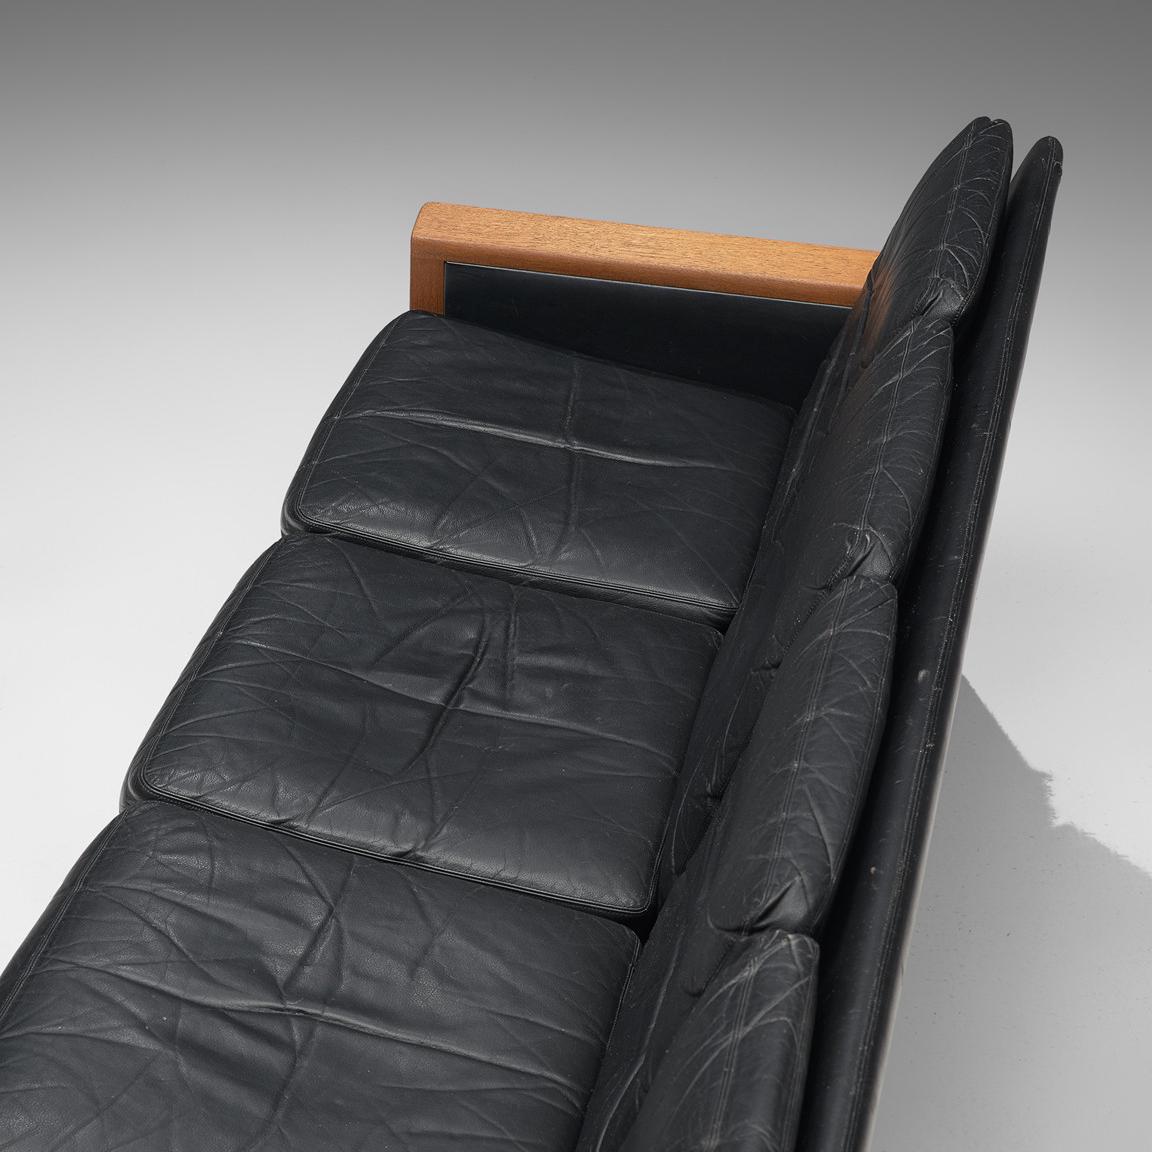 Hans Olsen Sofa in Black Leather and Teak  For Sale 1